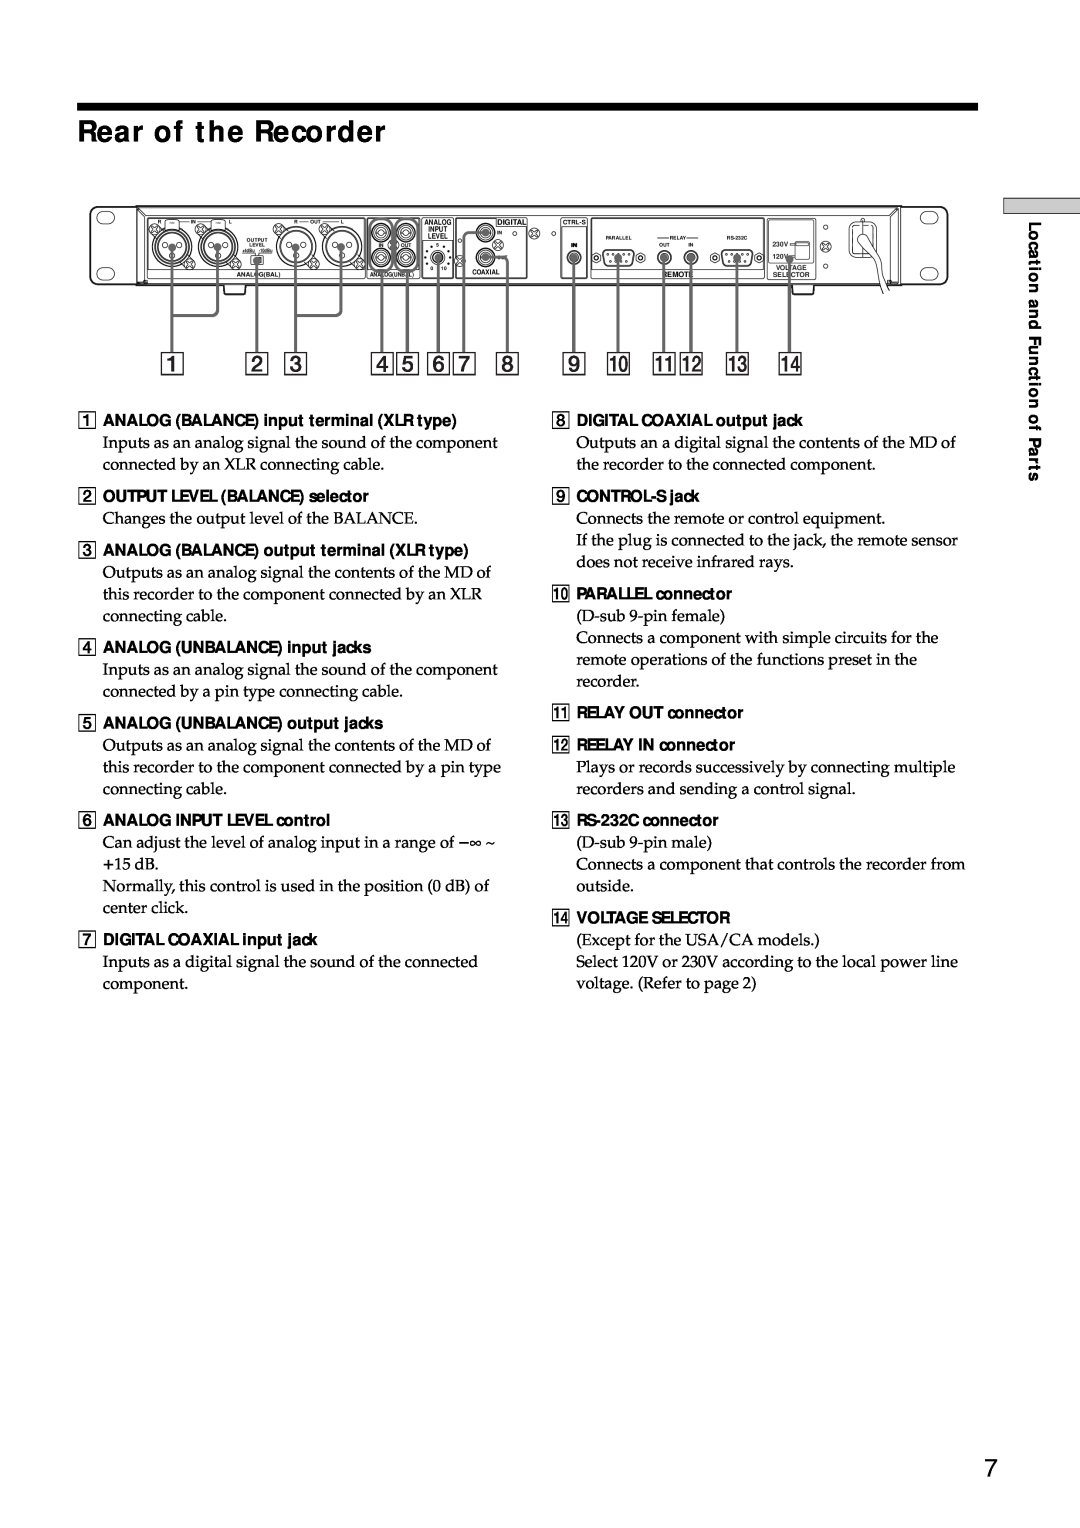 Sony MDS-E12 operating instructions Rear of the Recorder, 12 3, q qaqs qd qf 